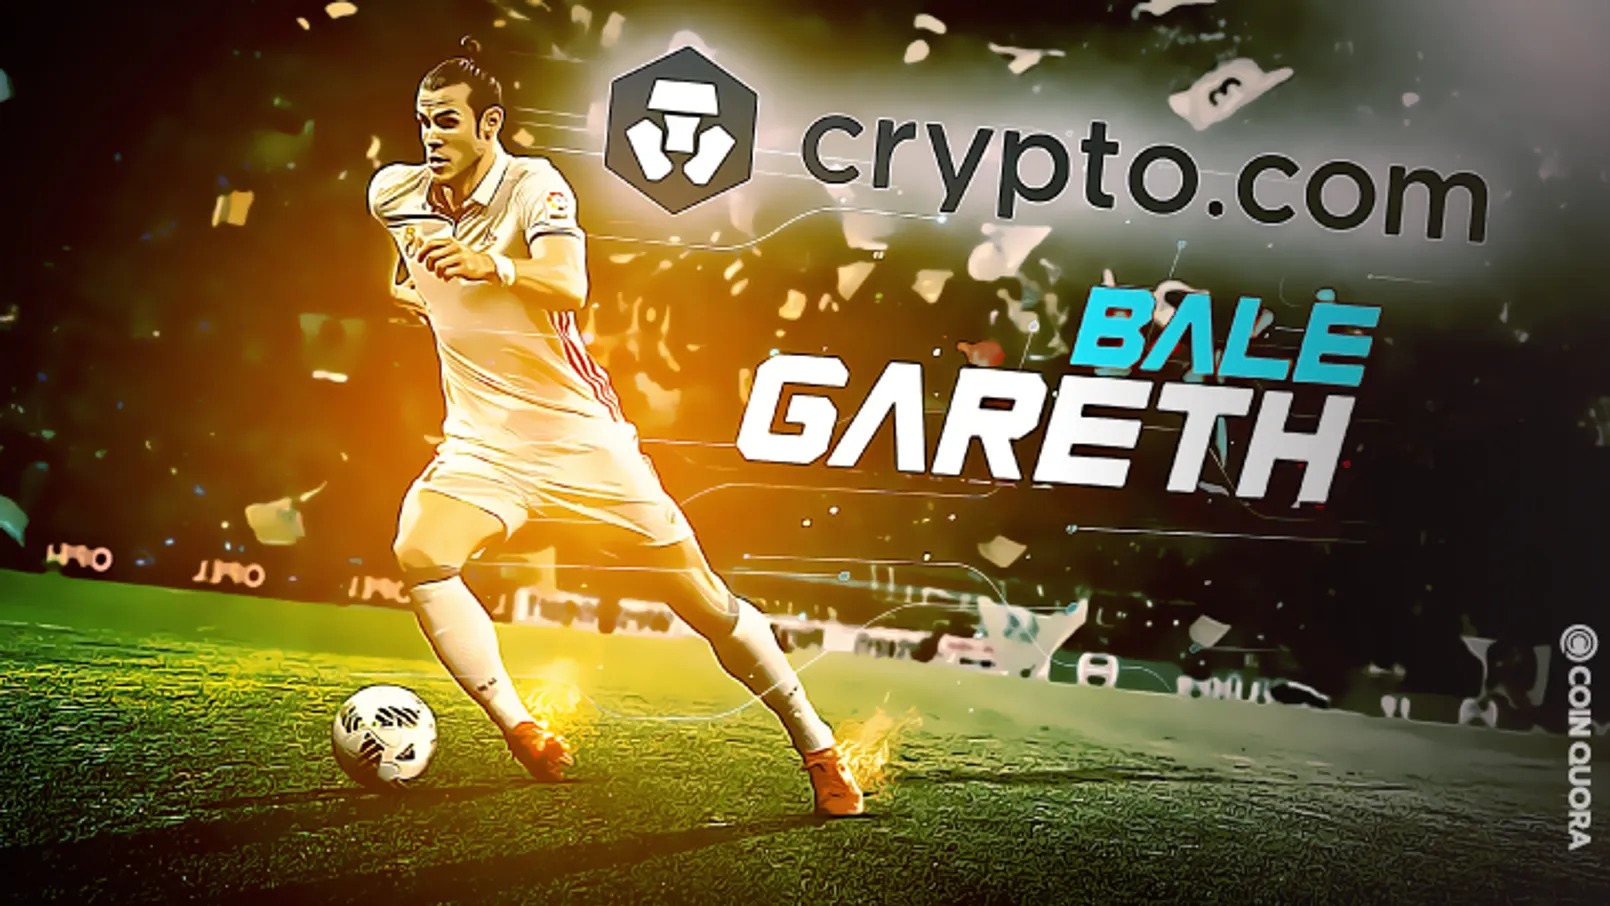 Gareth Bale to Unveil Nft Collection Via Crypto.com Nft on Sept. 28.jpg